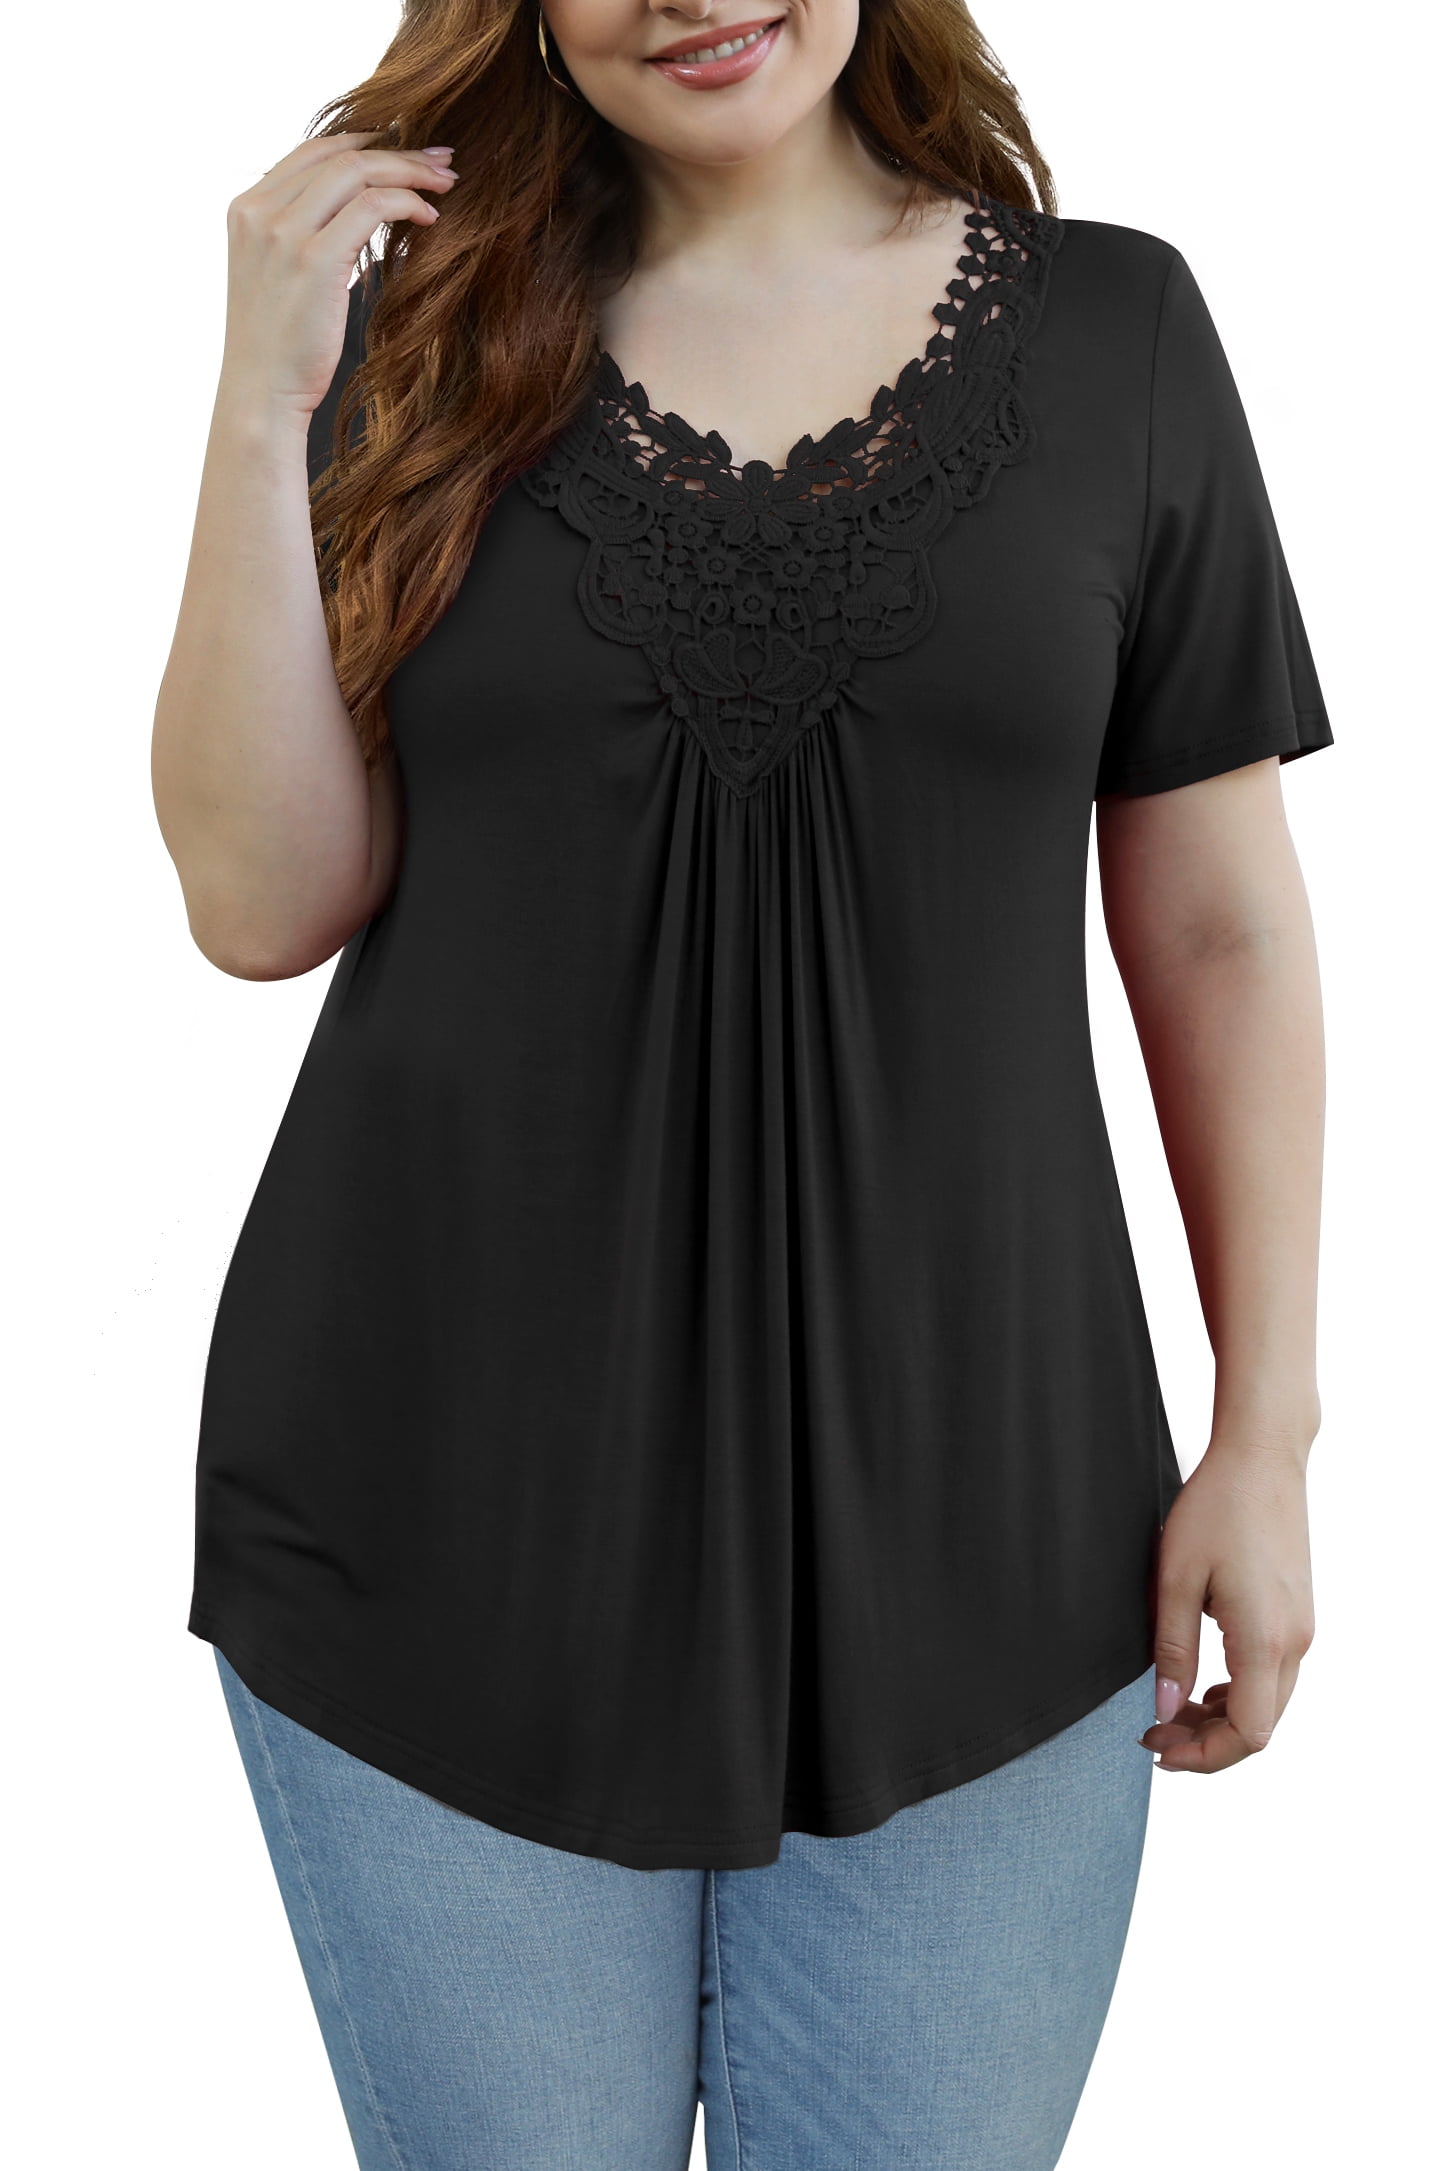 Othyroce Women's Plus Size Tops Short Sleeve Shirts Lace Crochet Tunic ...